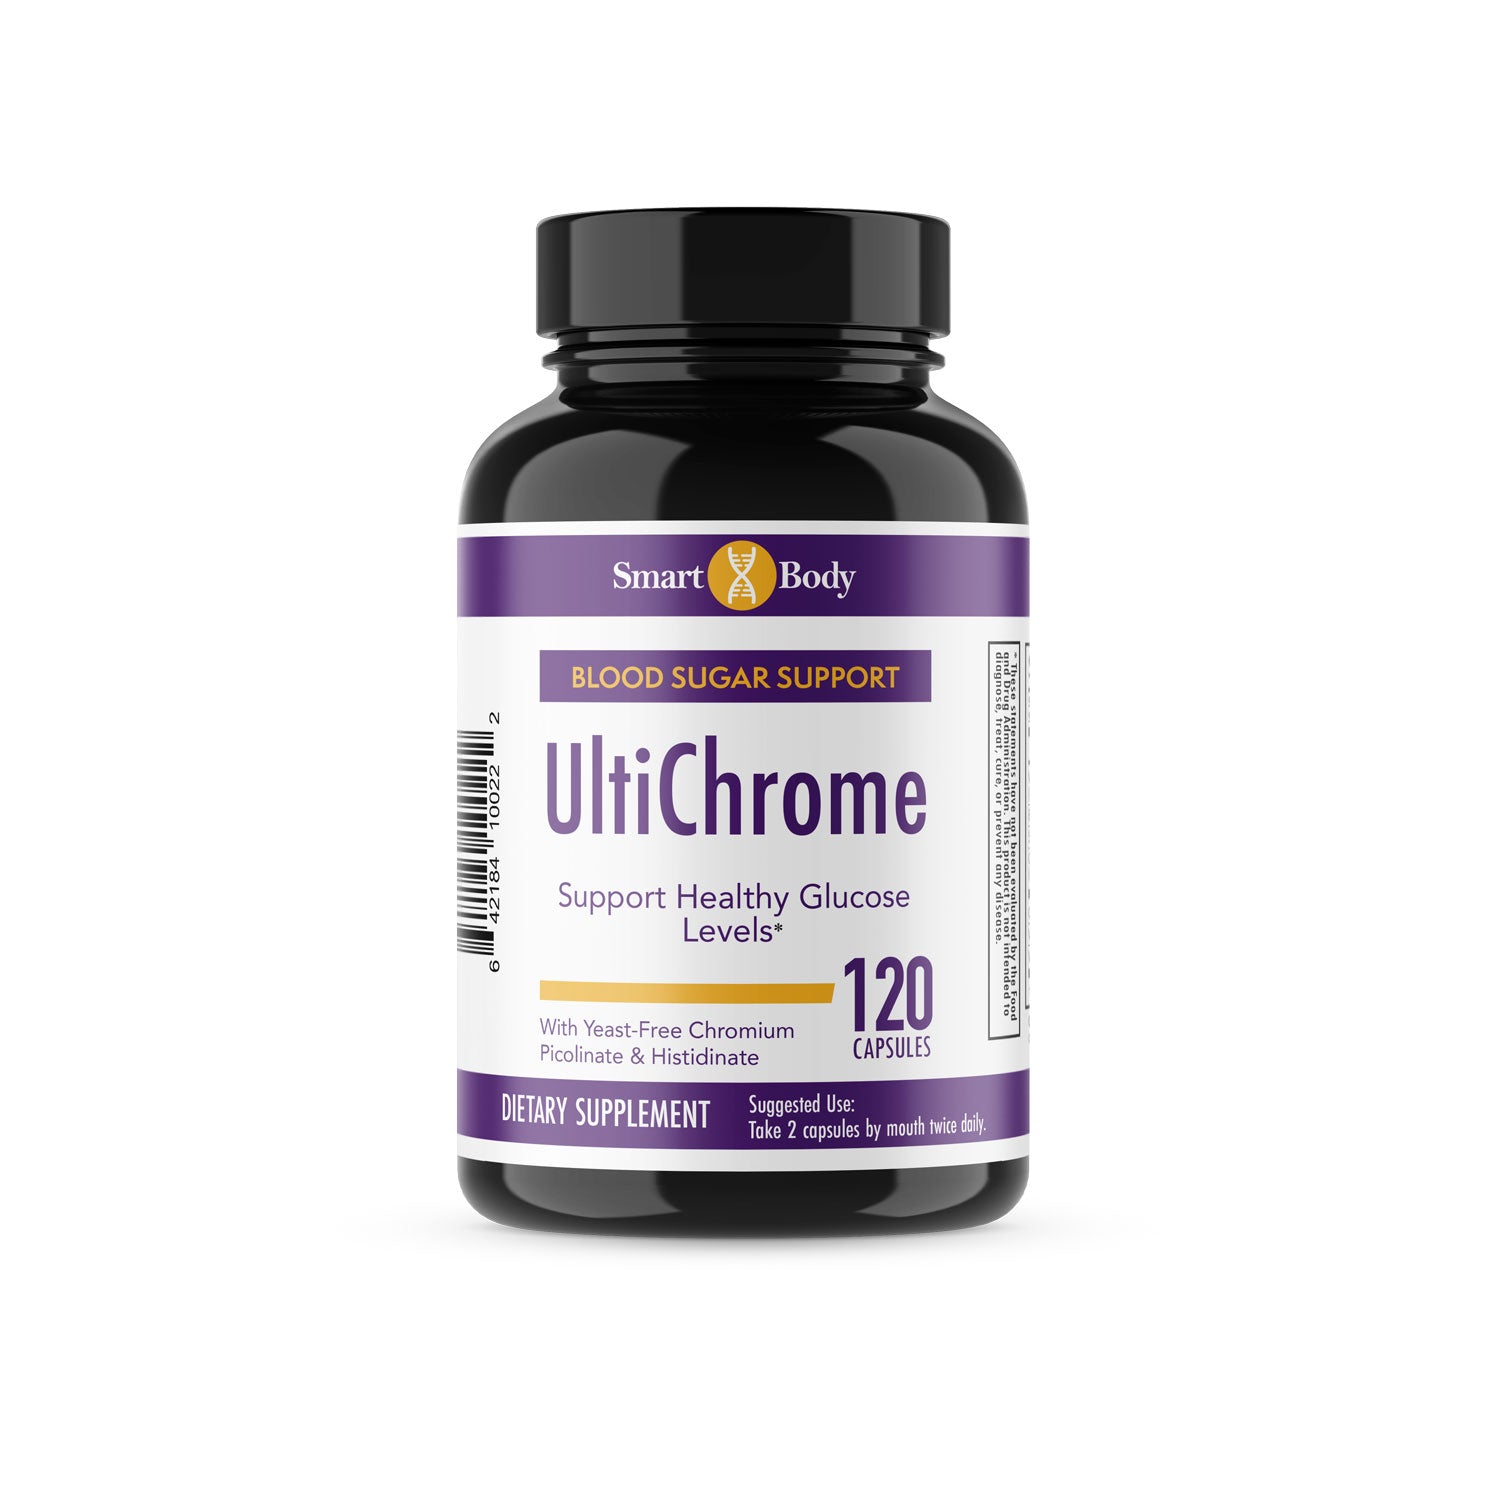 Ulti Chrome - Dual Chromium Formula with Biotin